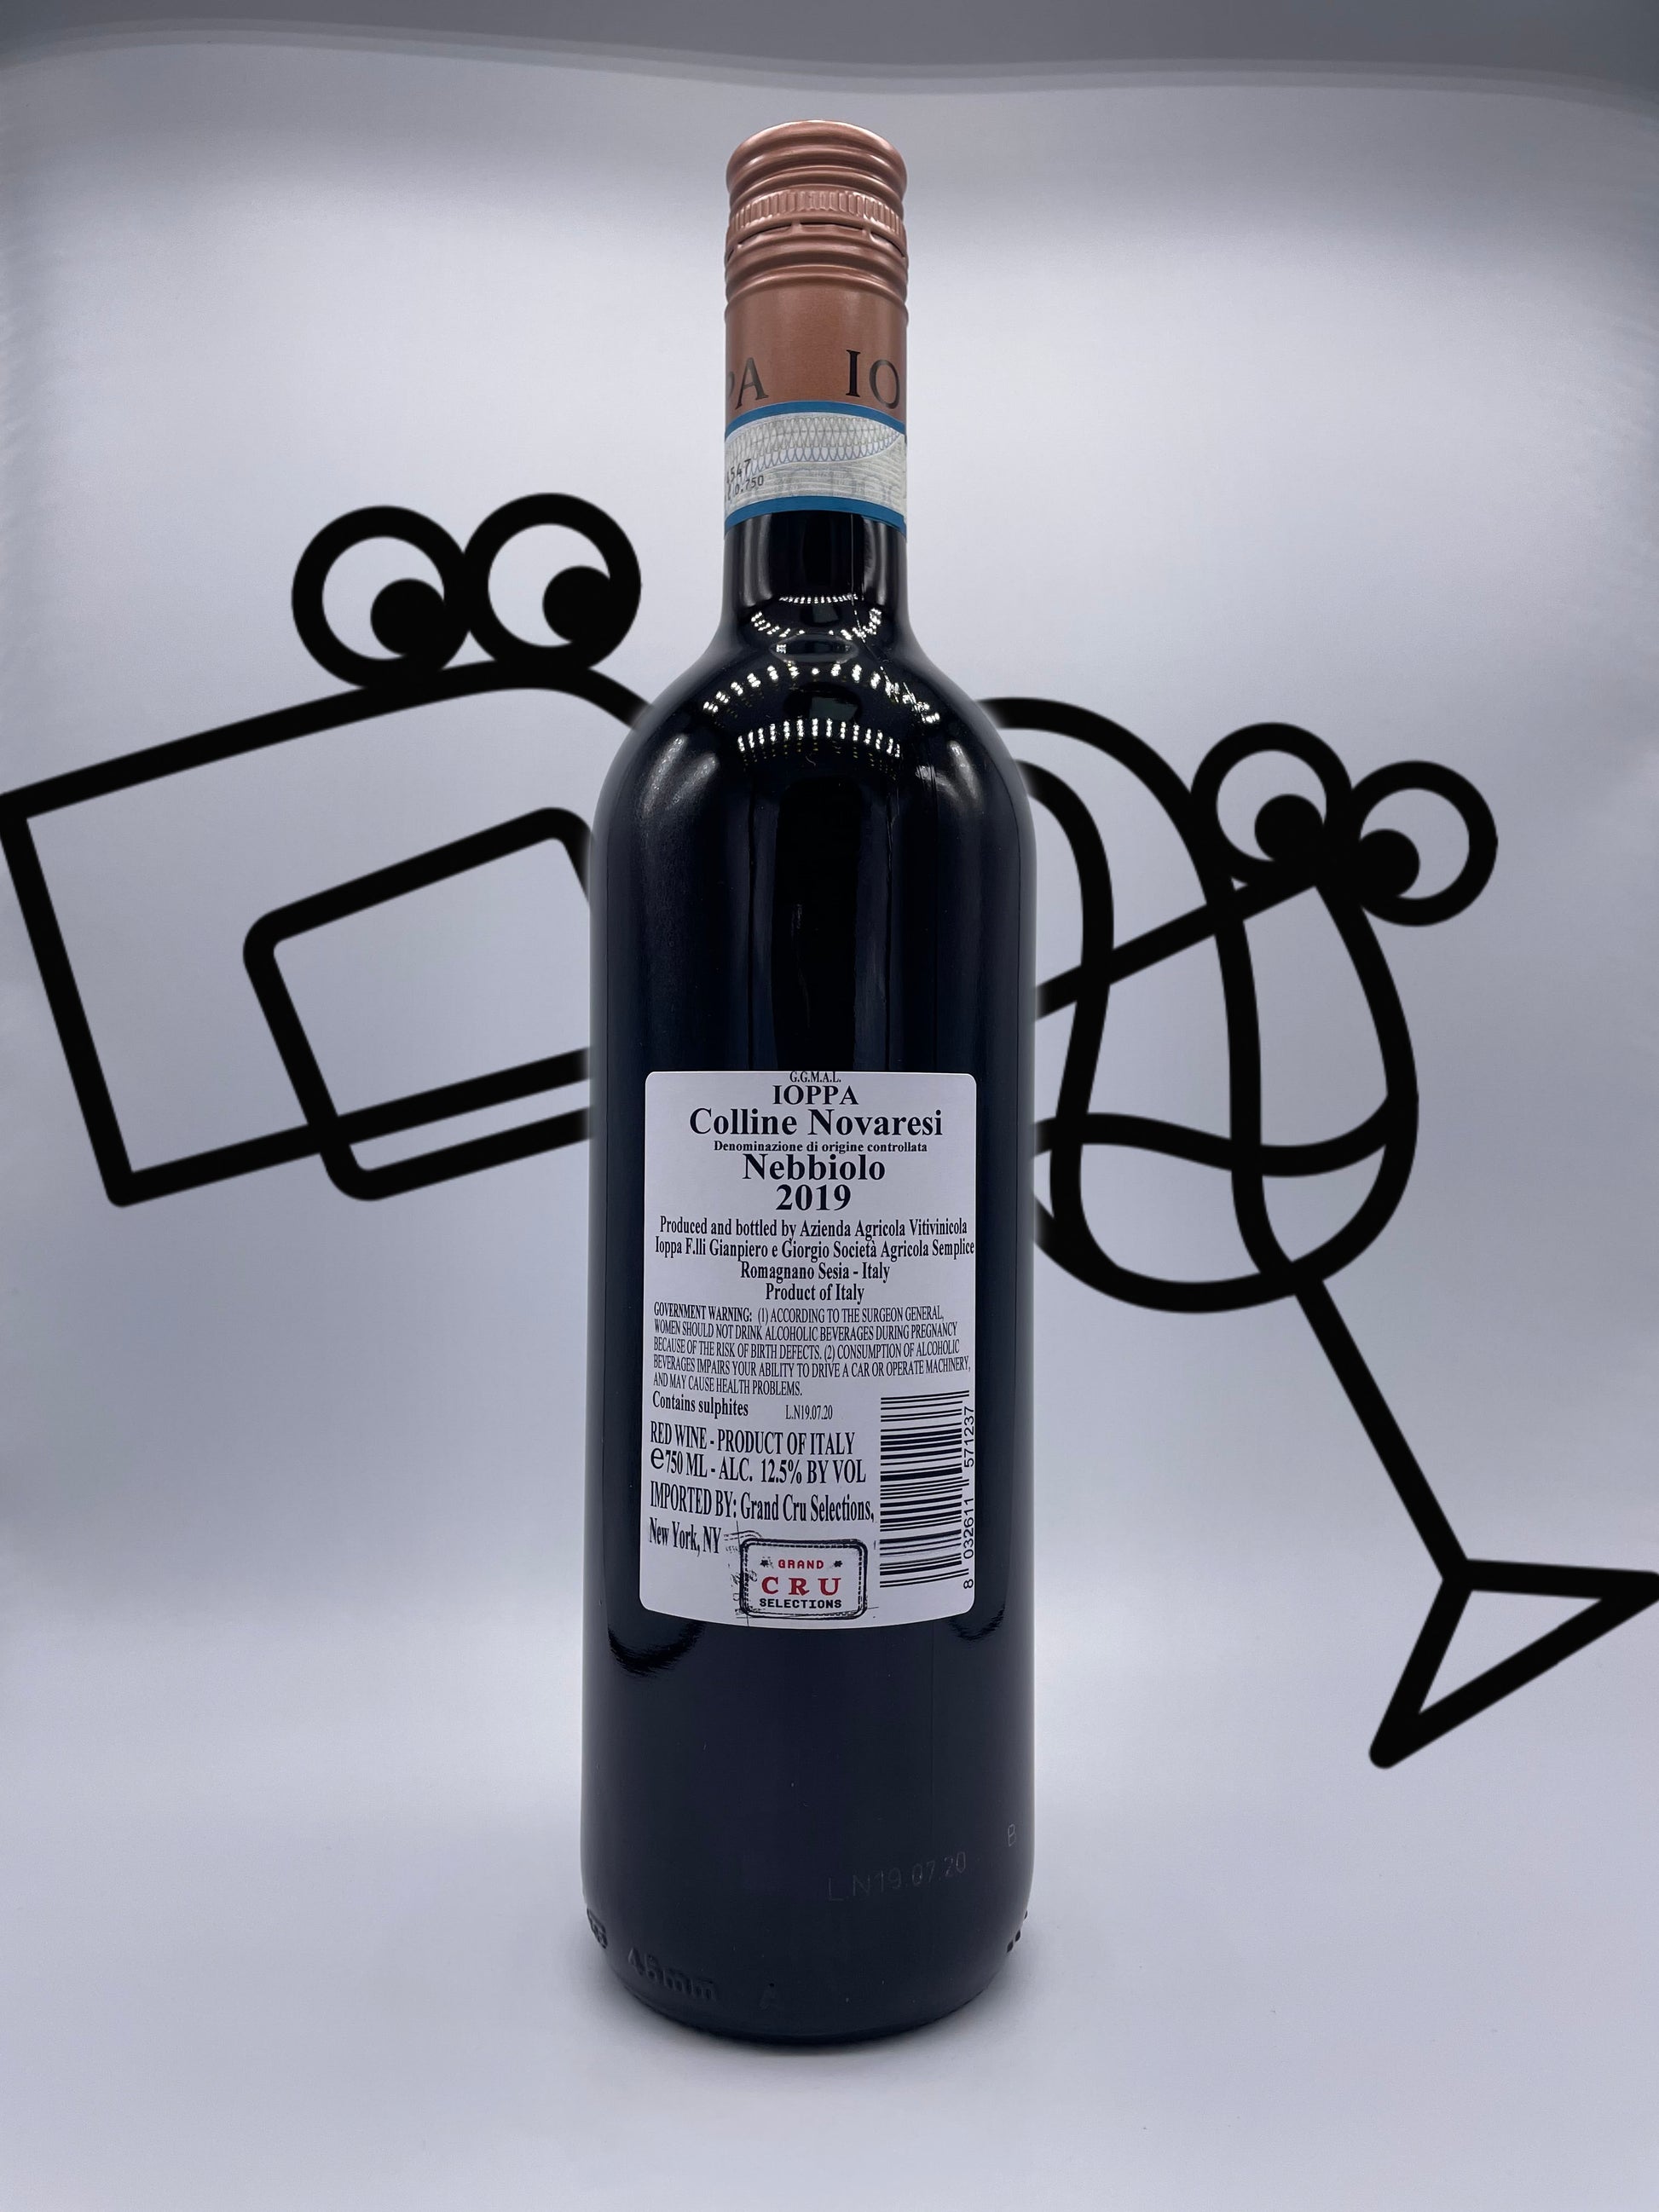 Ioppa 'Colline Novaresi' Nebbiolo 2021 Alto Piedmont, Italy - Williston Park Wines & Spirits